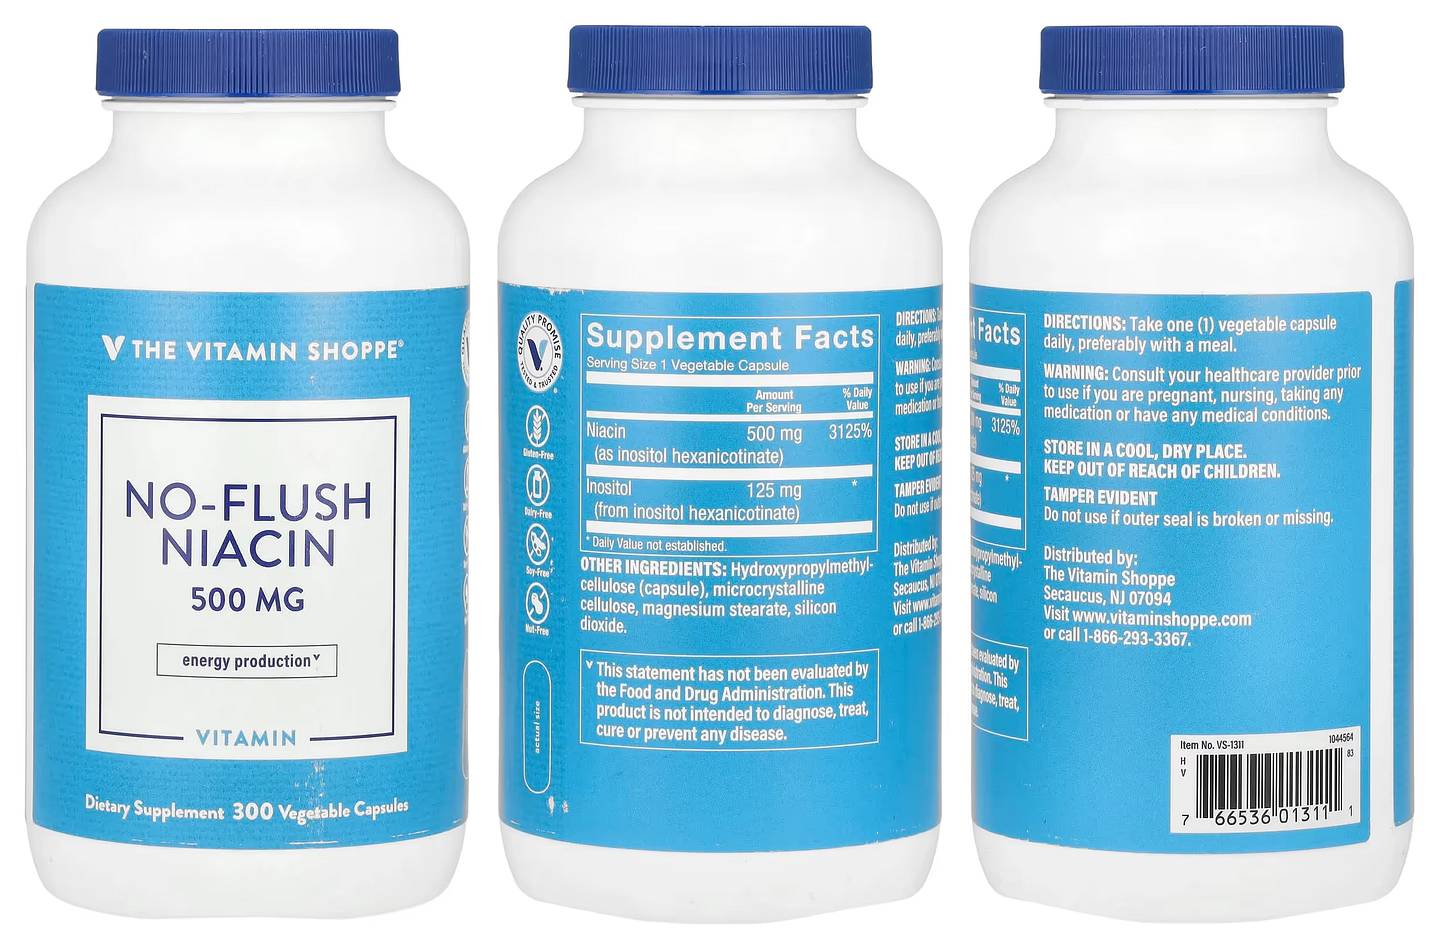 The Vitamin Shoppe, No-Flush Niacin packaging